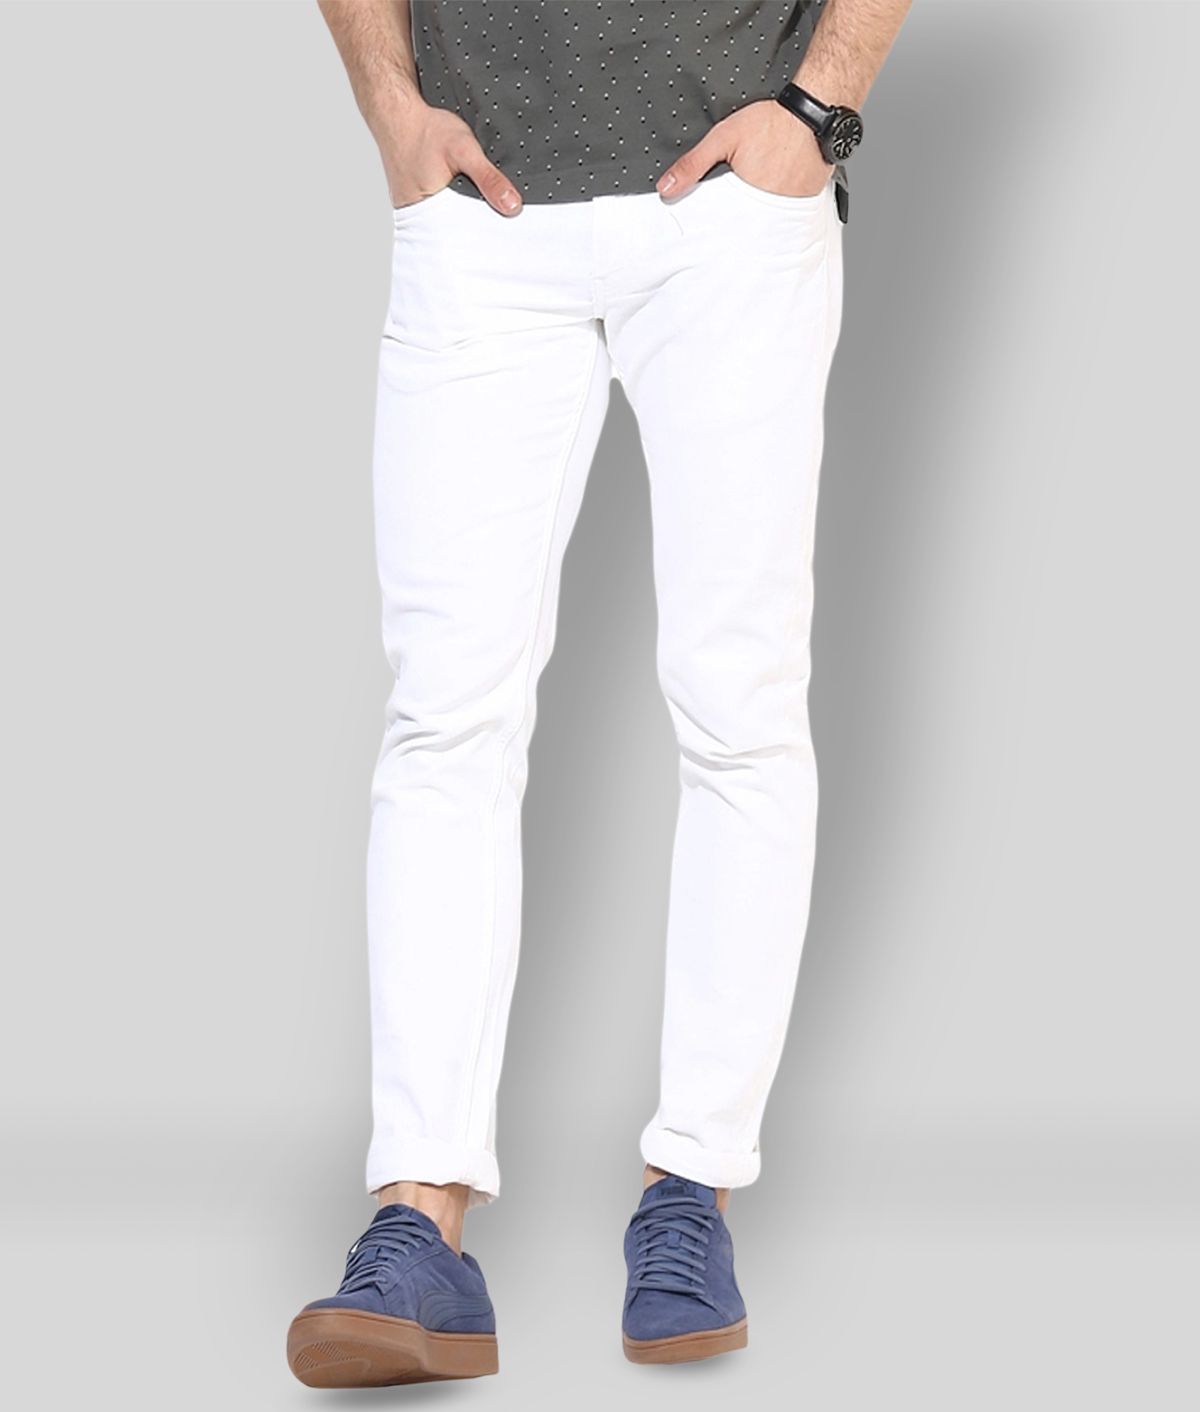     			x20 - White Cotton Blend Skinny Men's Jeans ( Pack of 1 )